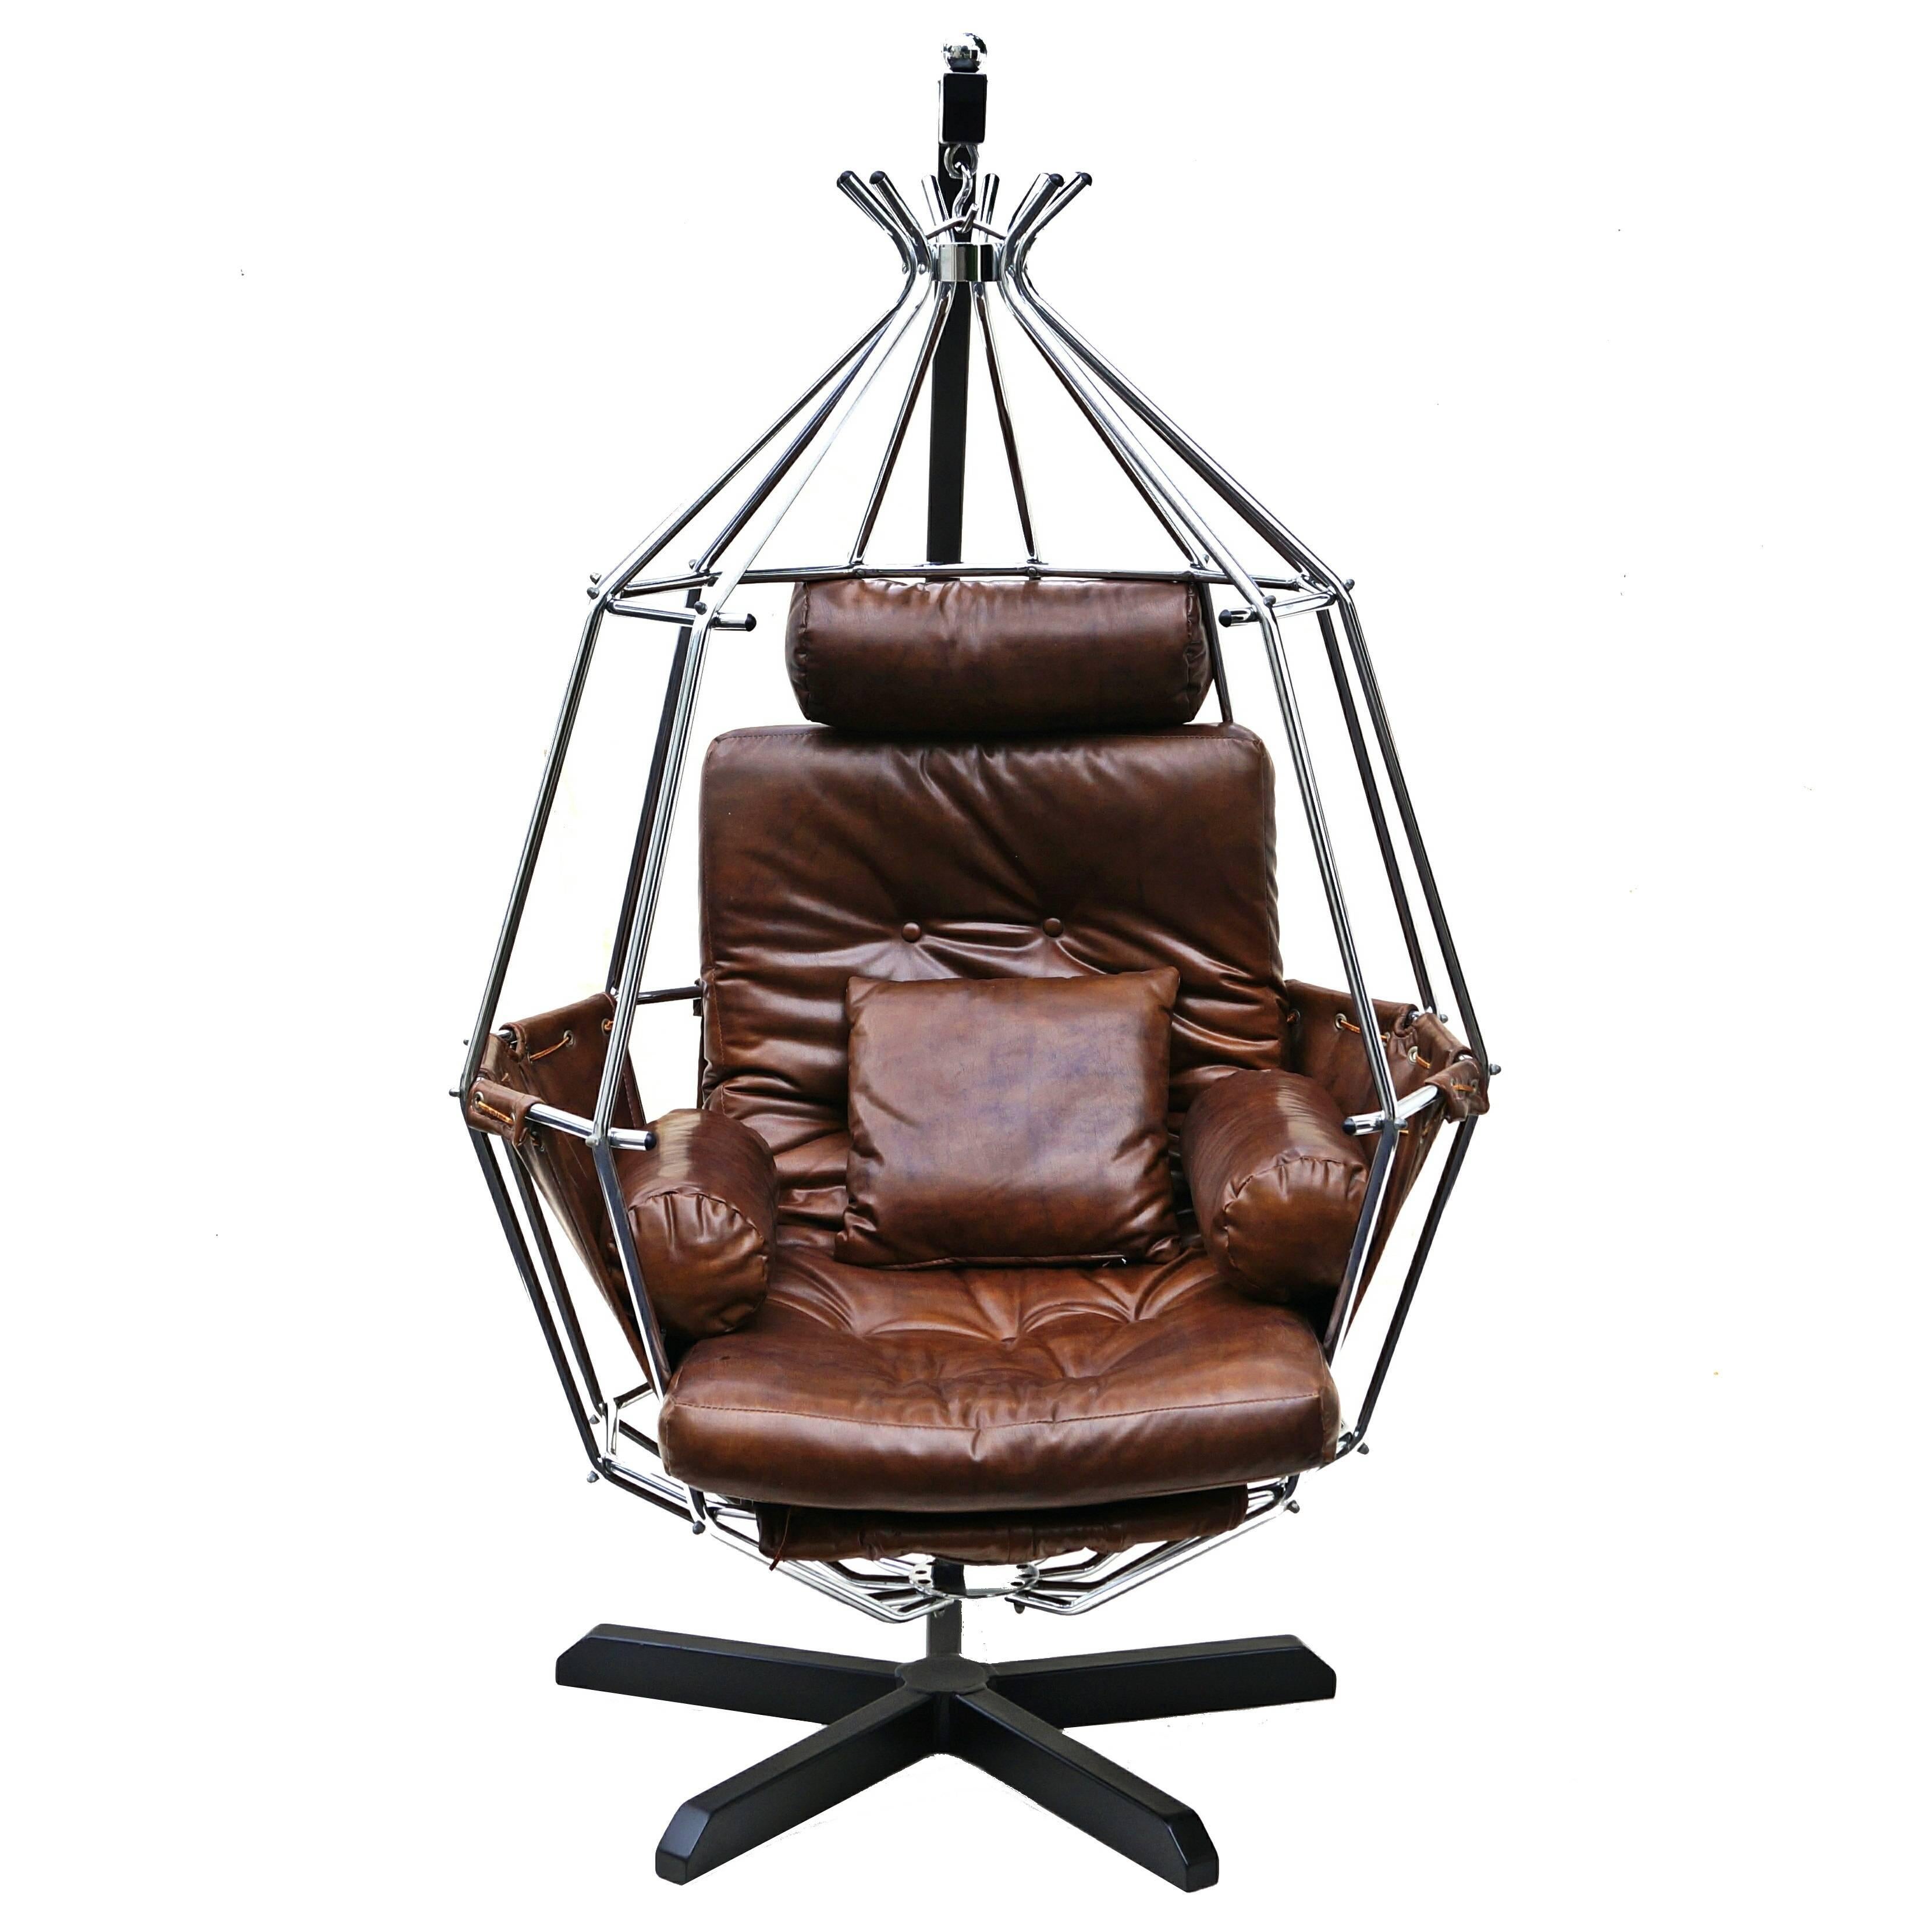 Ib Arberg Hanging Parrot Mid-Century Modern Chair